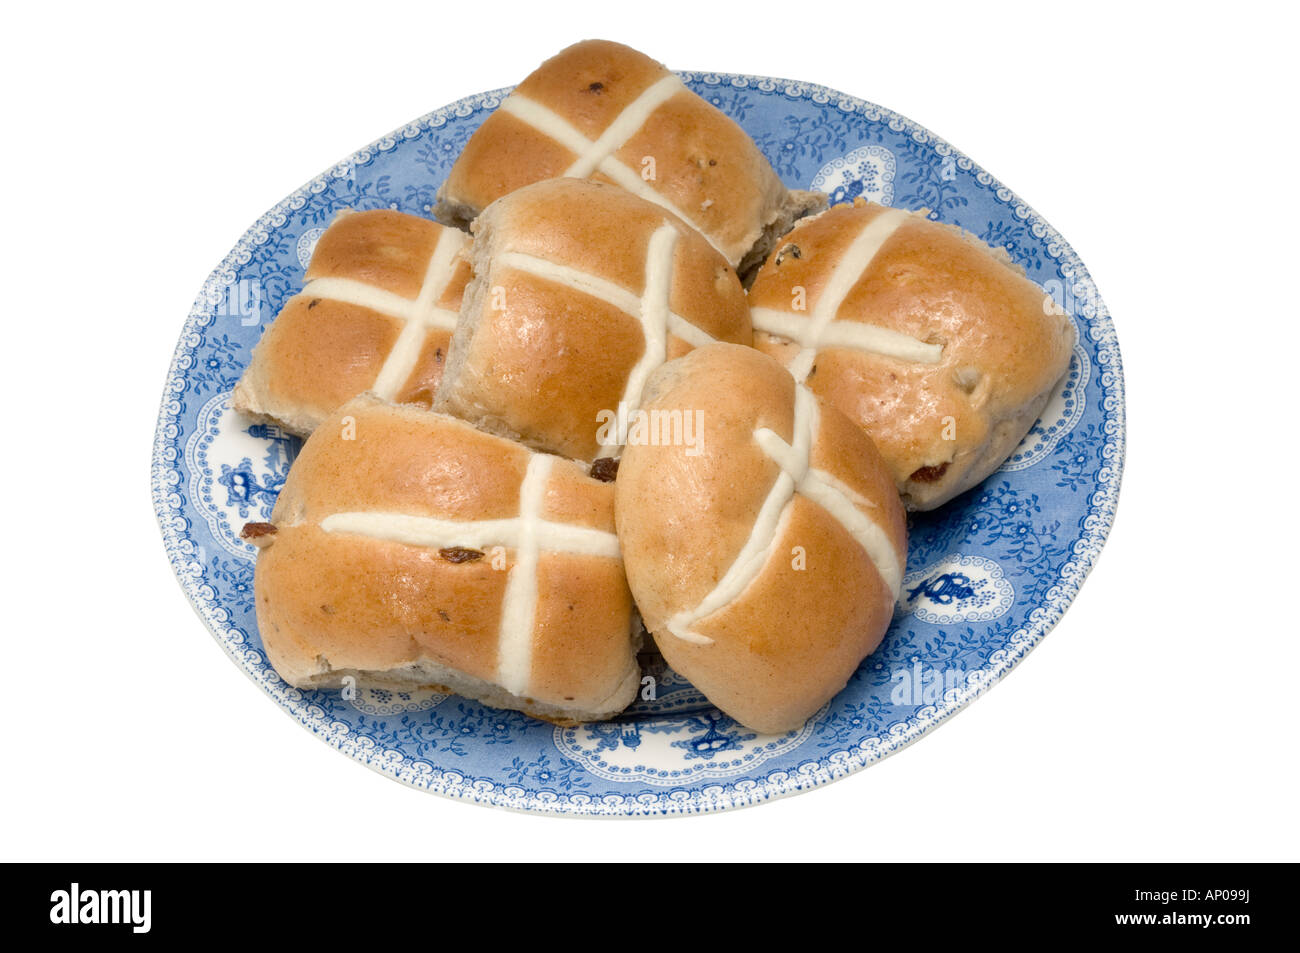 Hot cross buns on a blue plate Stock Photo